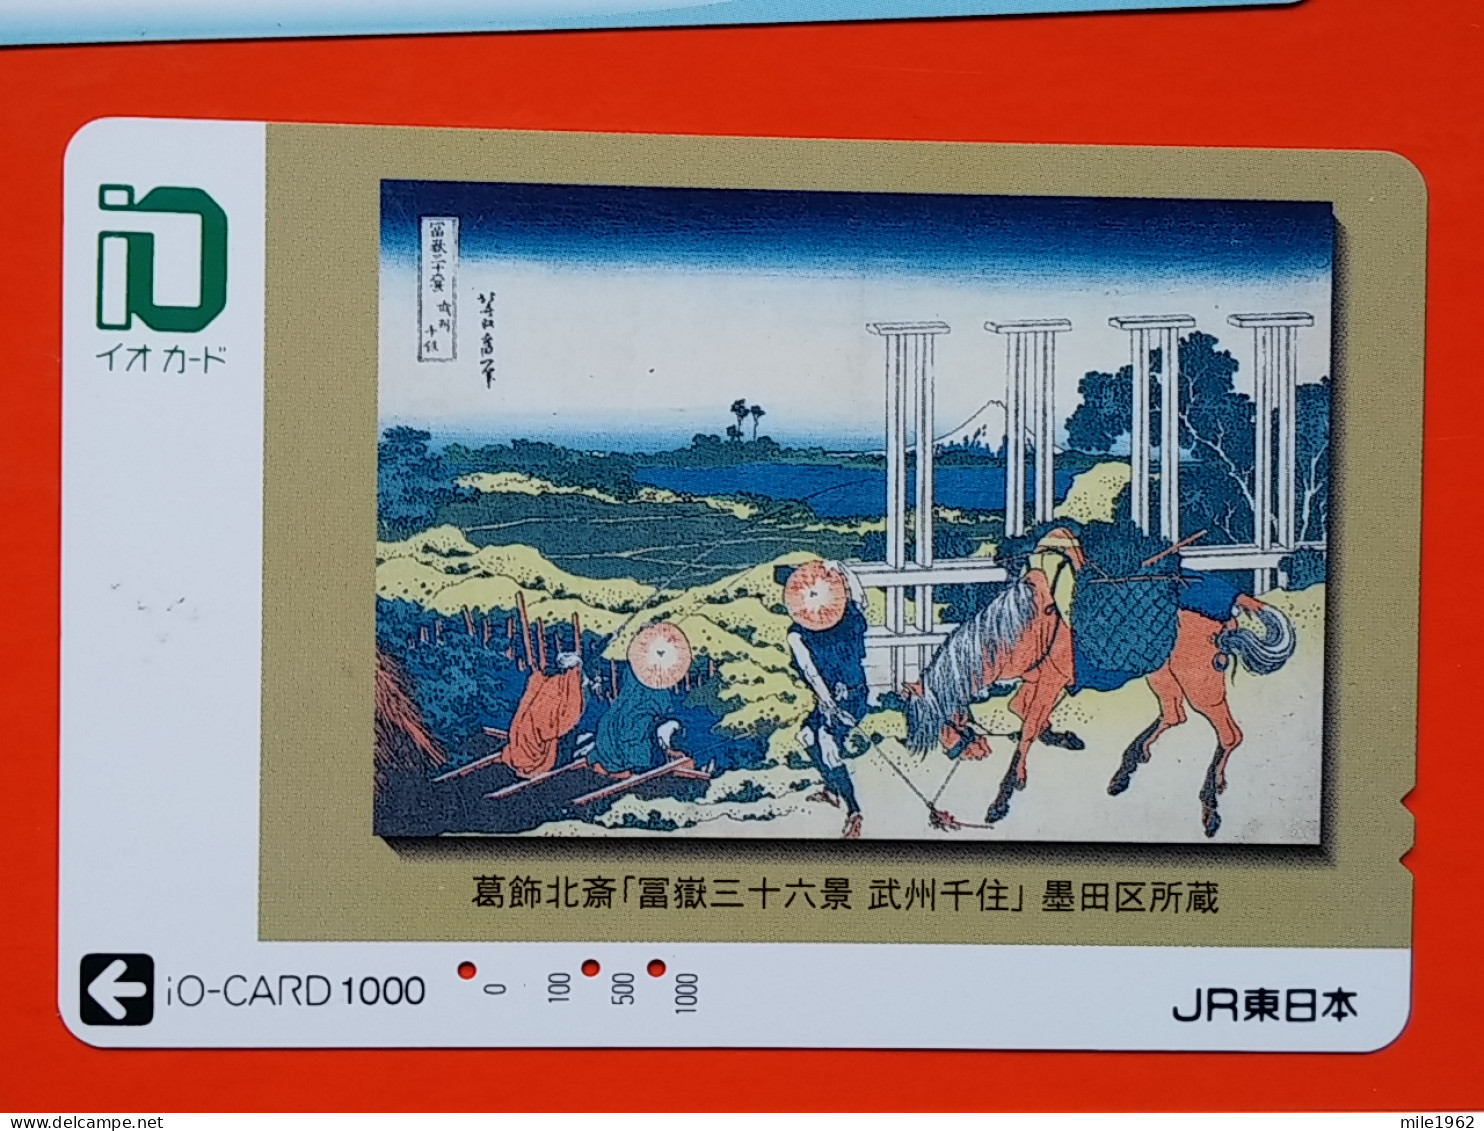 T-189 - JAPAN -JAPON, NIPON, Carte Prepayee - Painting, Peinture - Japon